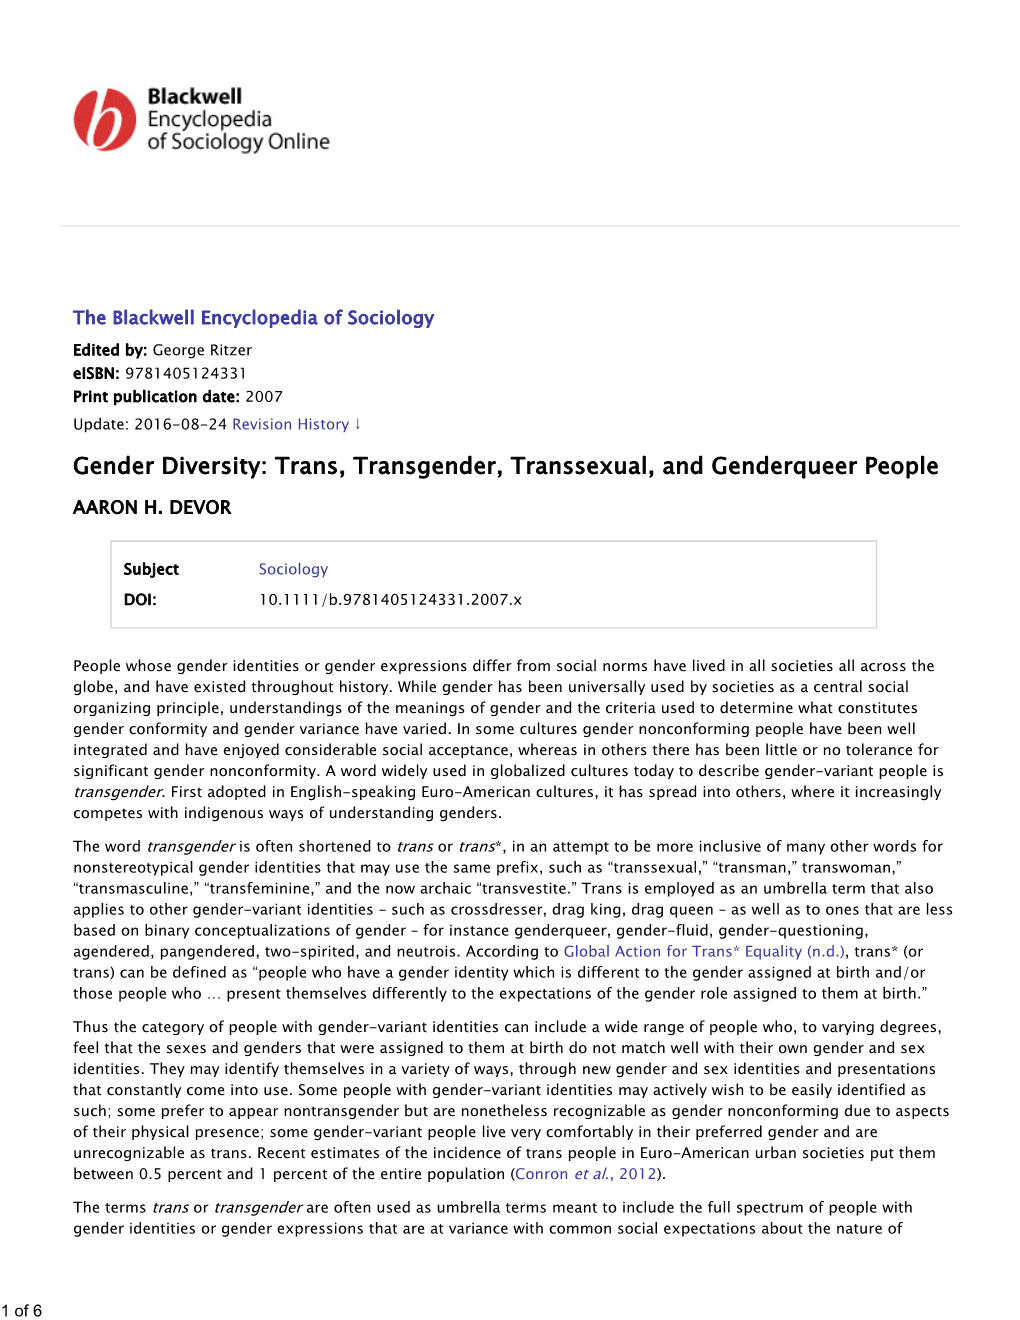 Trans, Transgender, Transsexual, and Genderqueer People